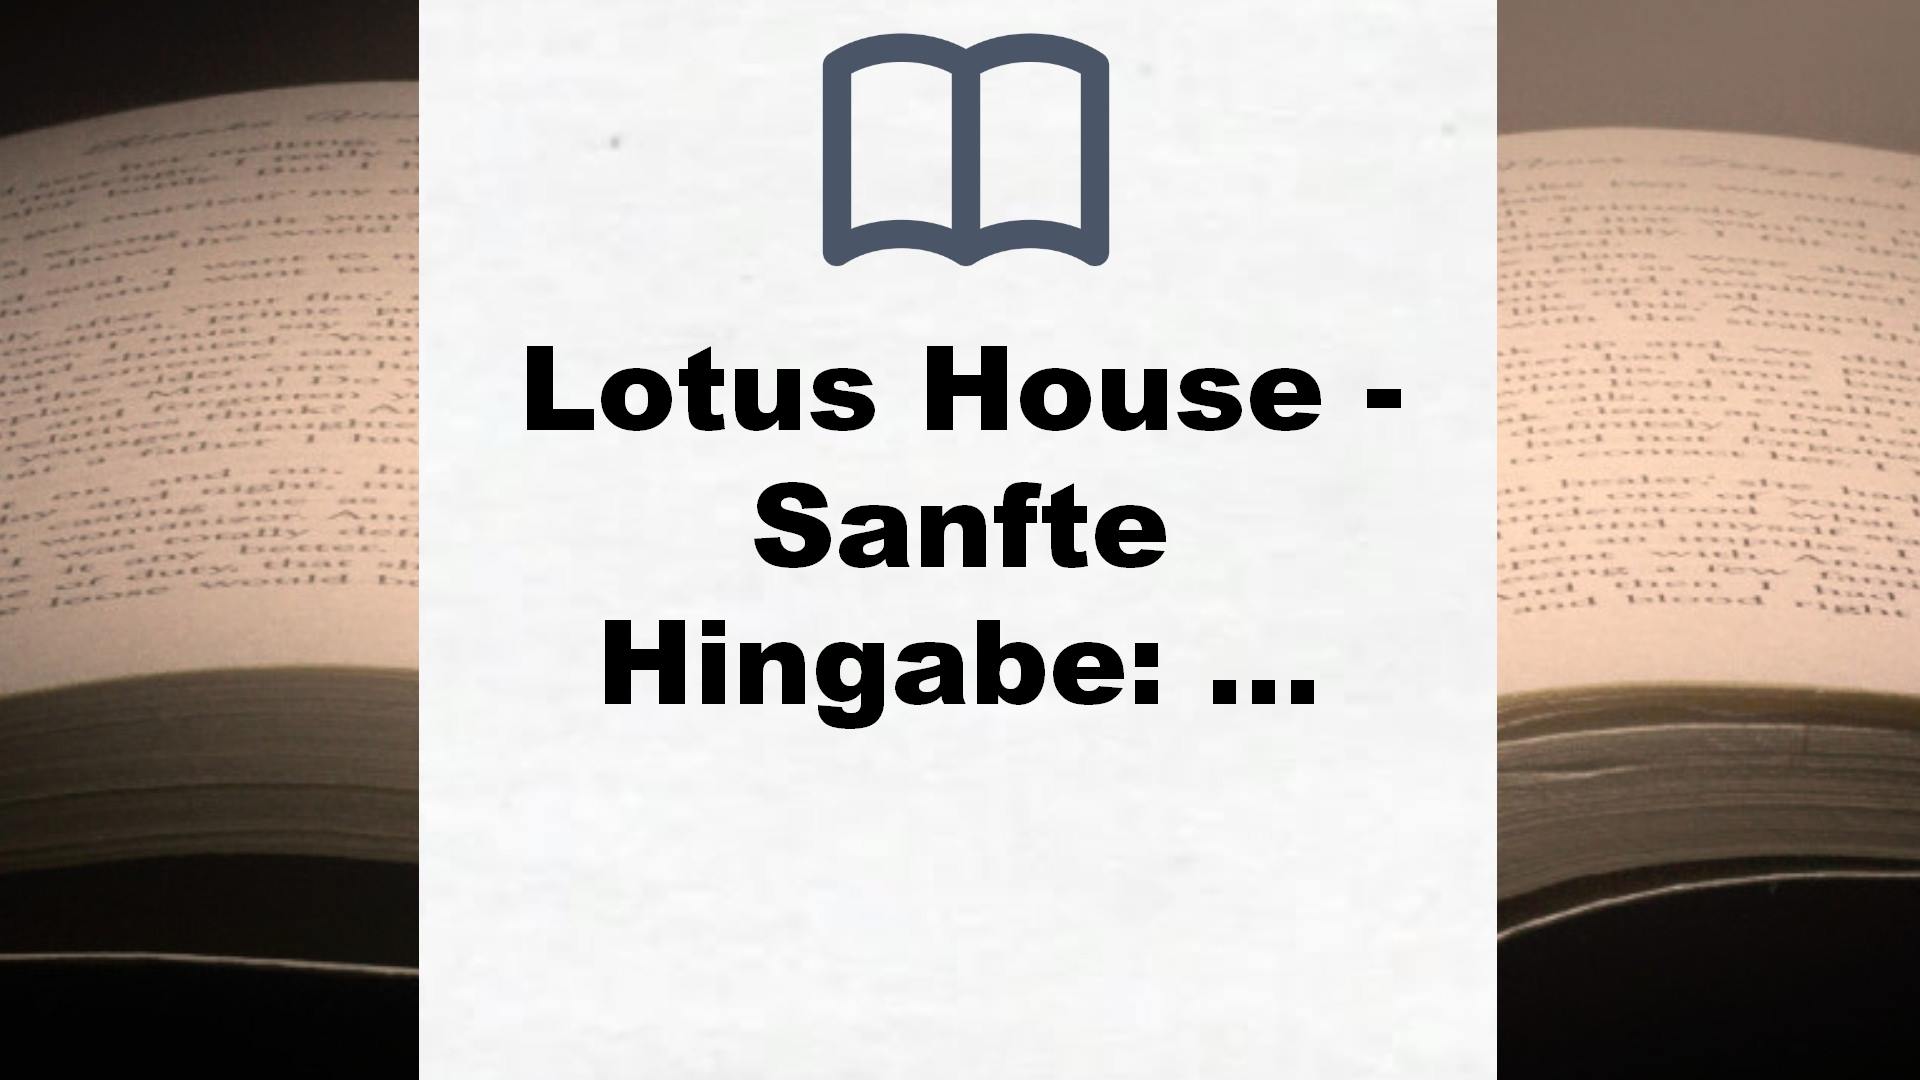 Lotus House – Sanfte Hingabe: Roman (Die Lotus House-Serie, Band 2) – Buchrezension